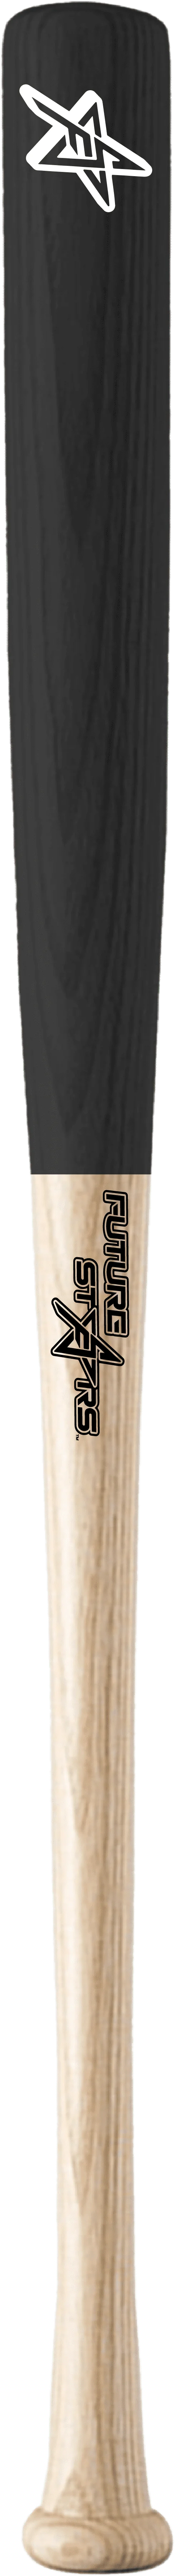 

Pro-Style Baseball Bat - Big Barrel 2.25" - Two-Tone Barrel and Natural Grain Handle